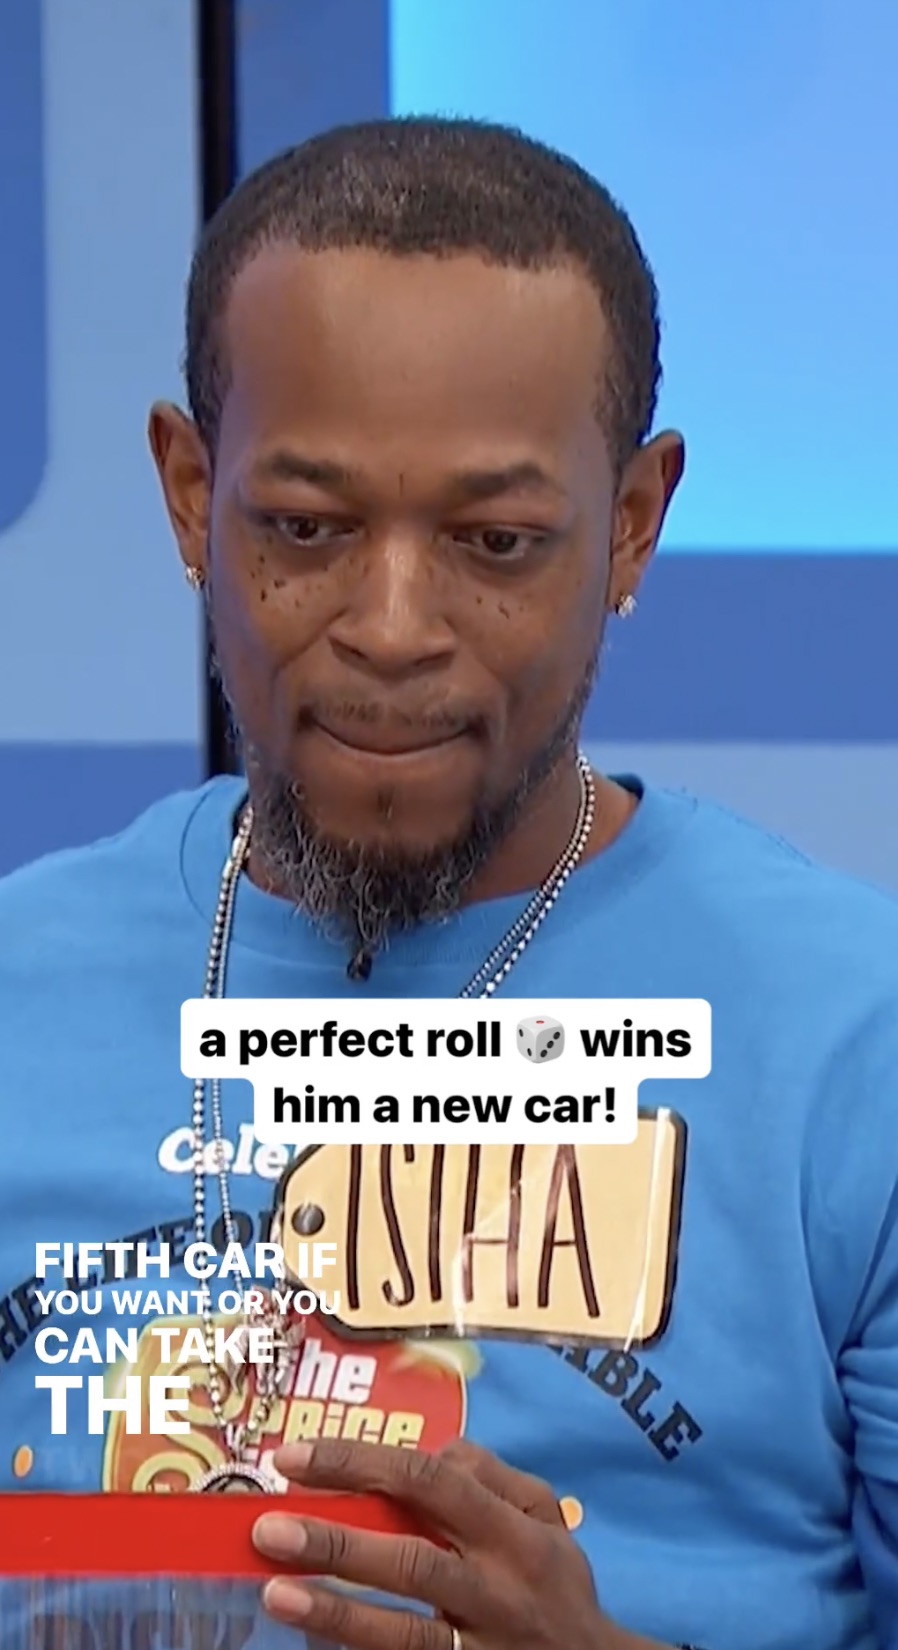 The contestant won a major car prize